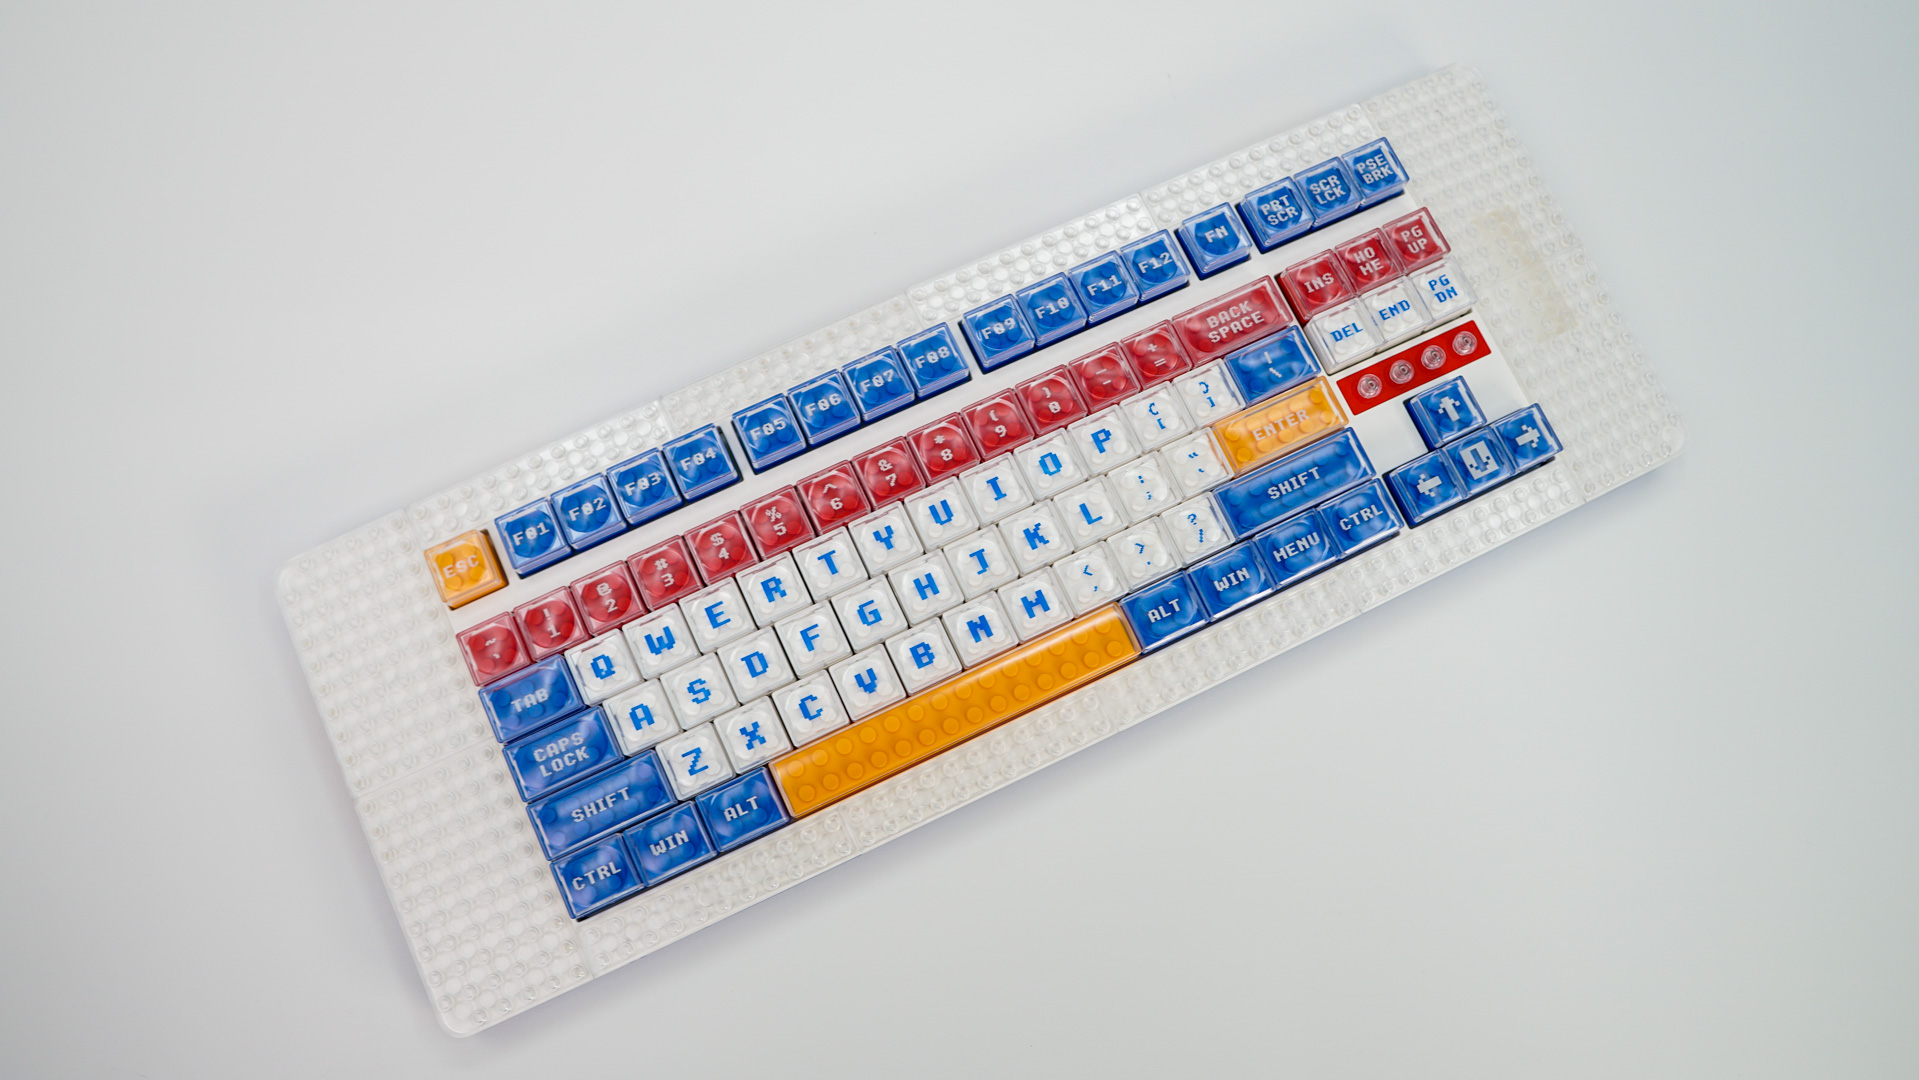 MelGeek Pixel Lego-Themed Mechanical Keyboard